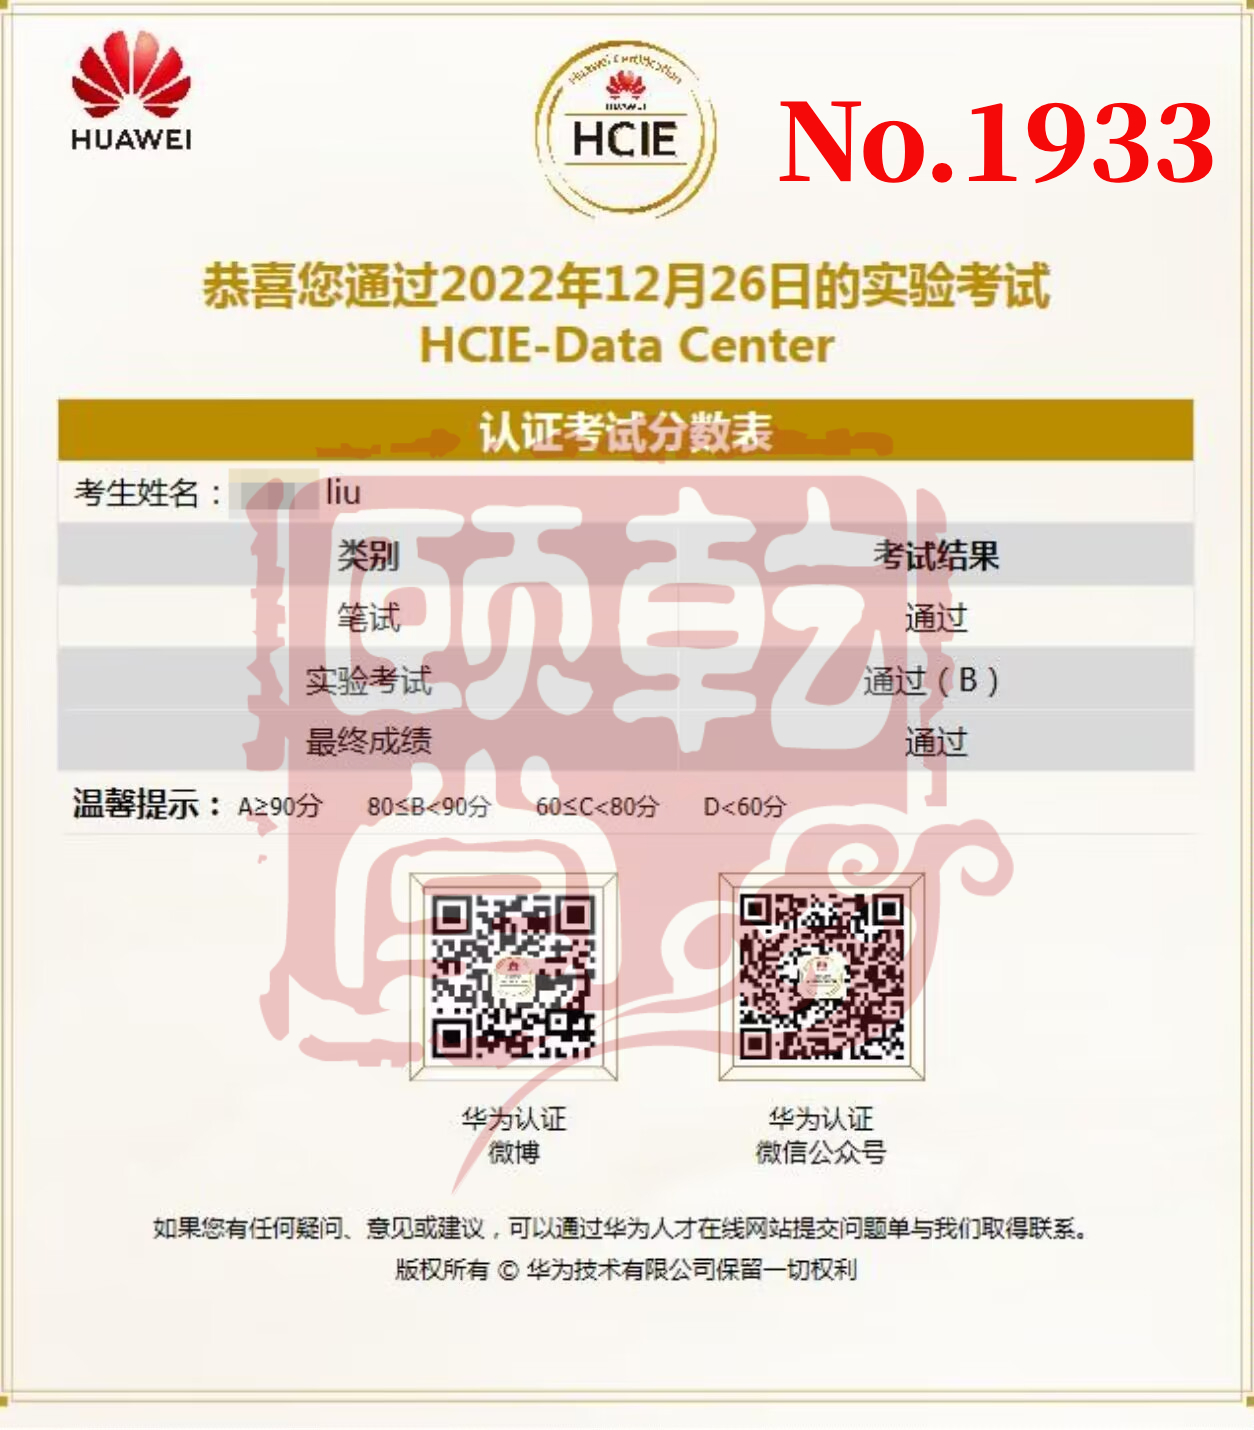 HCIE DC 刘 12.26.jpg